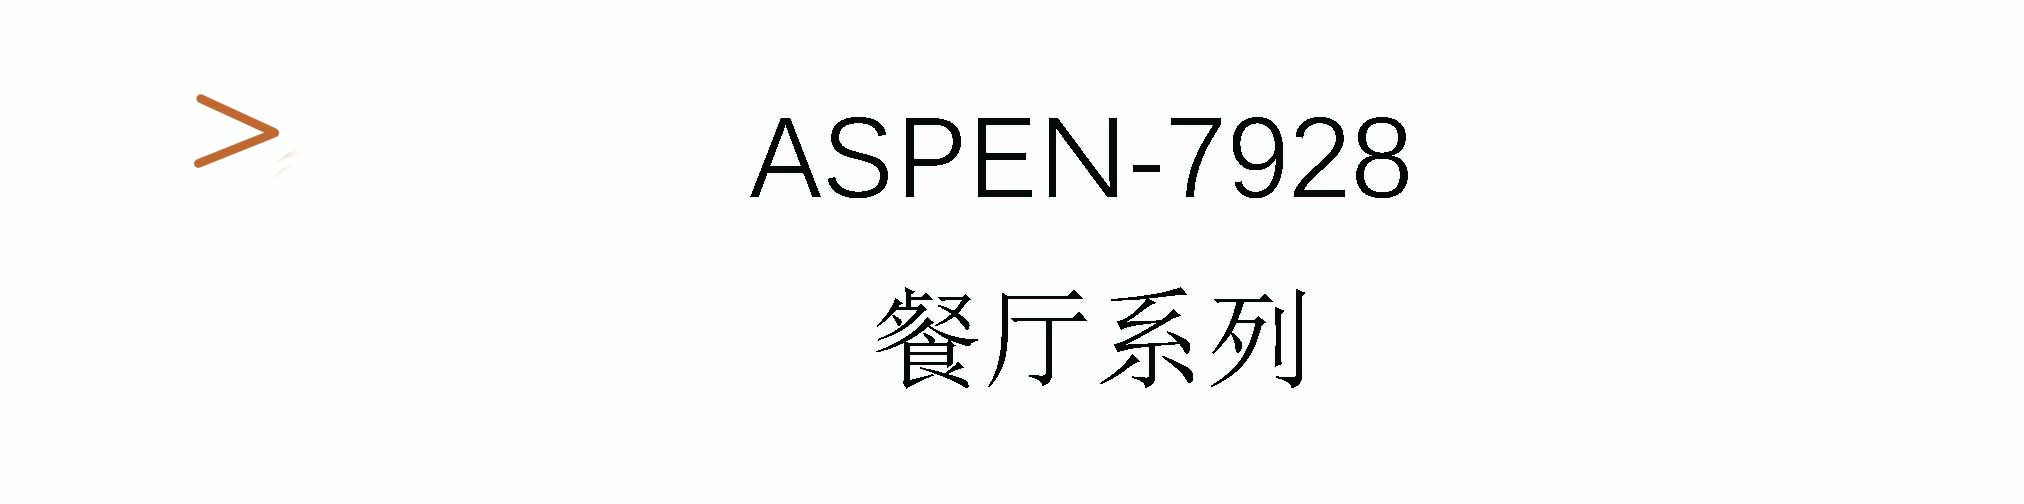 Aspen-7928